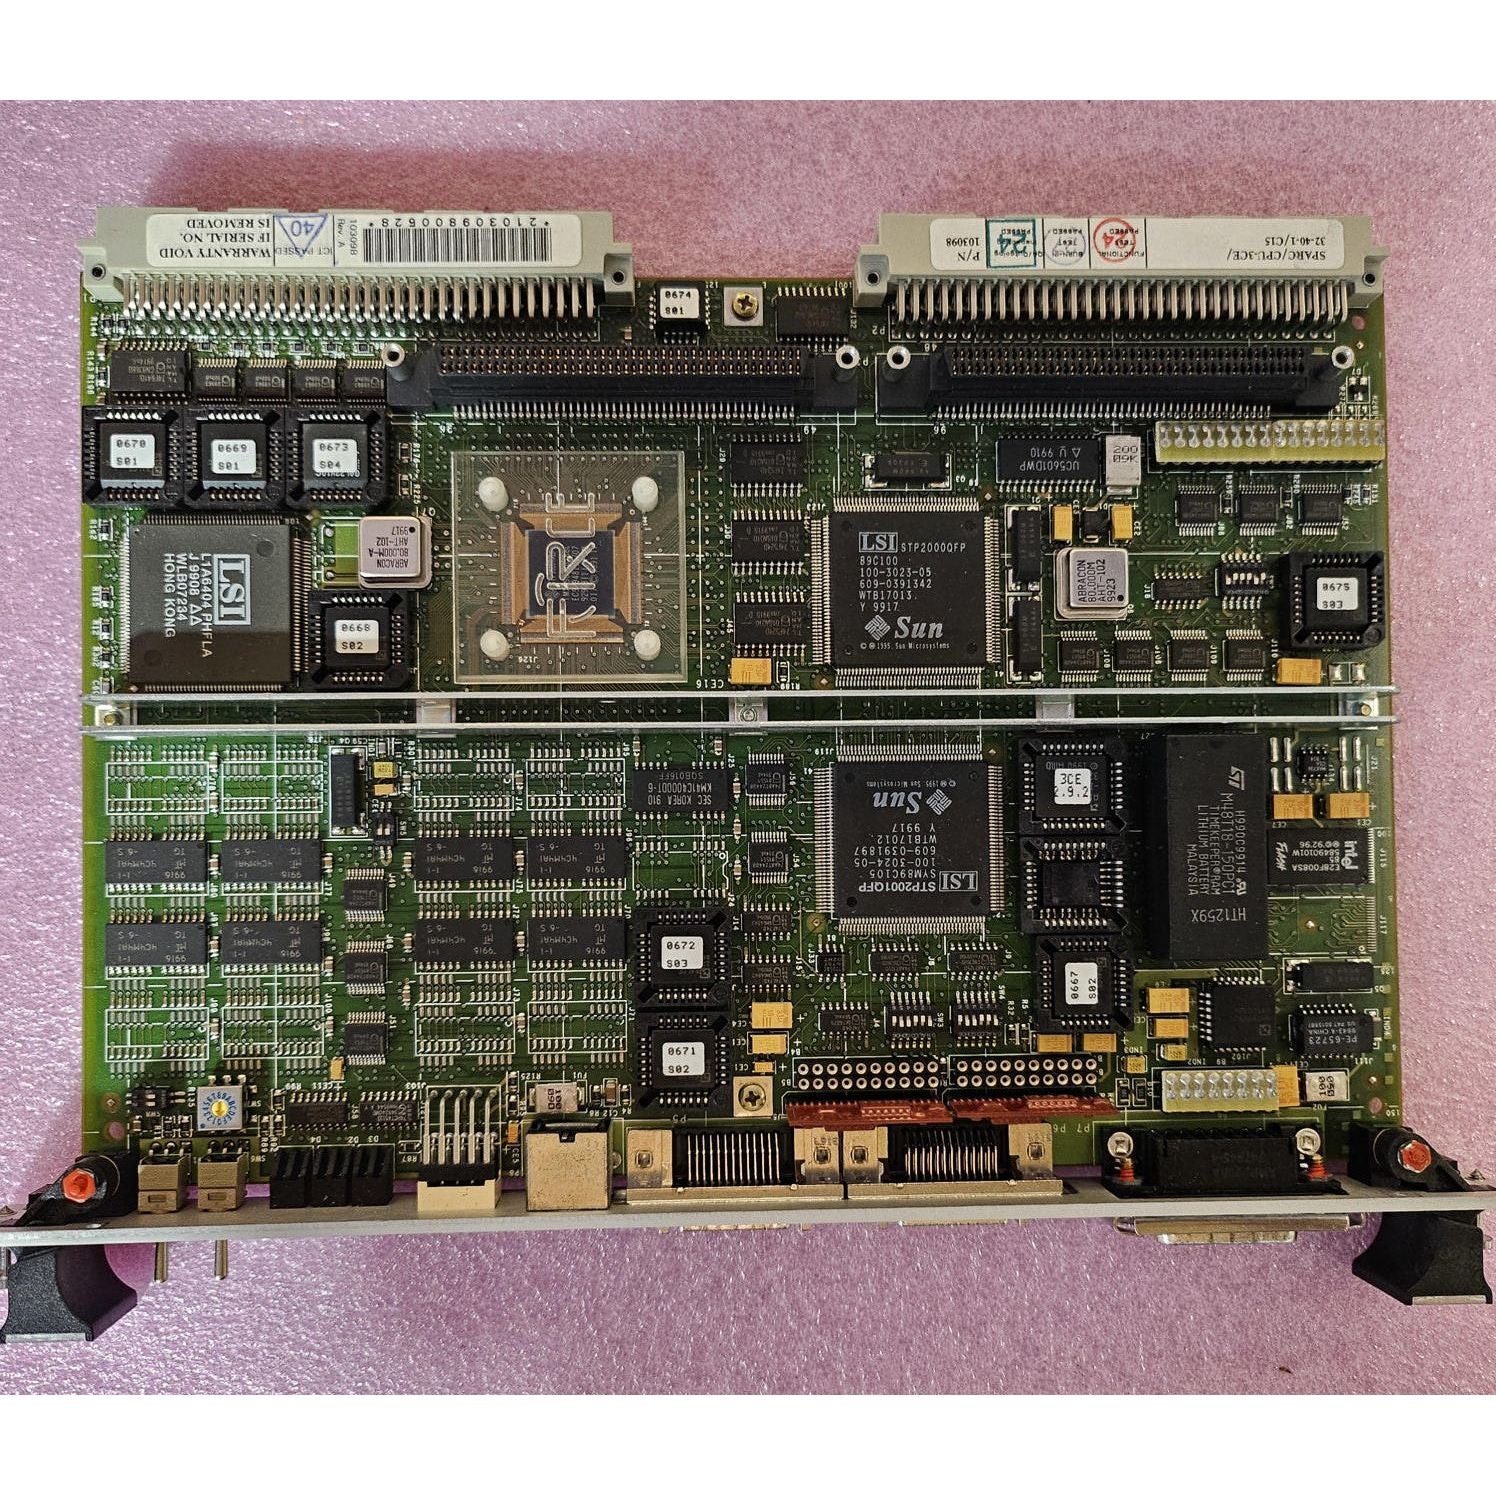 CPU-3CE / 32-40-1 |力计算机